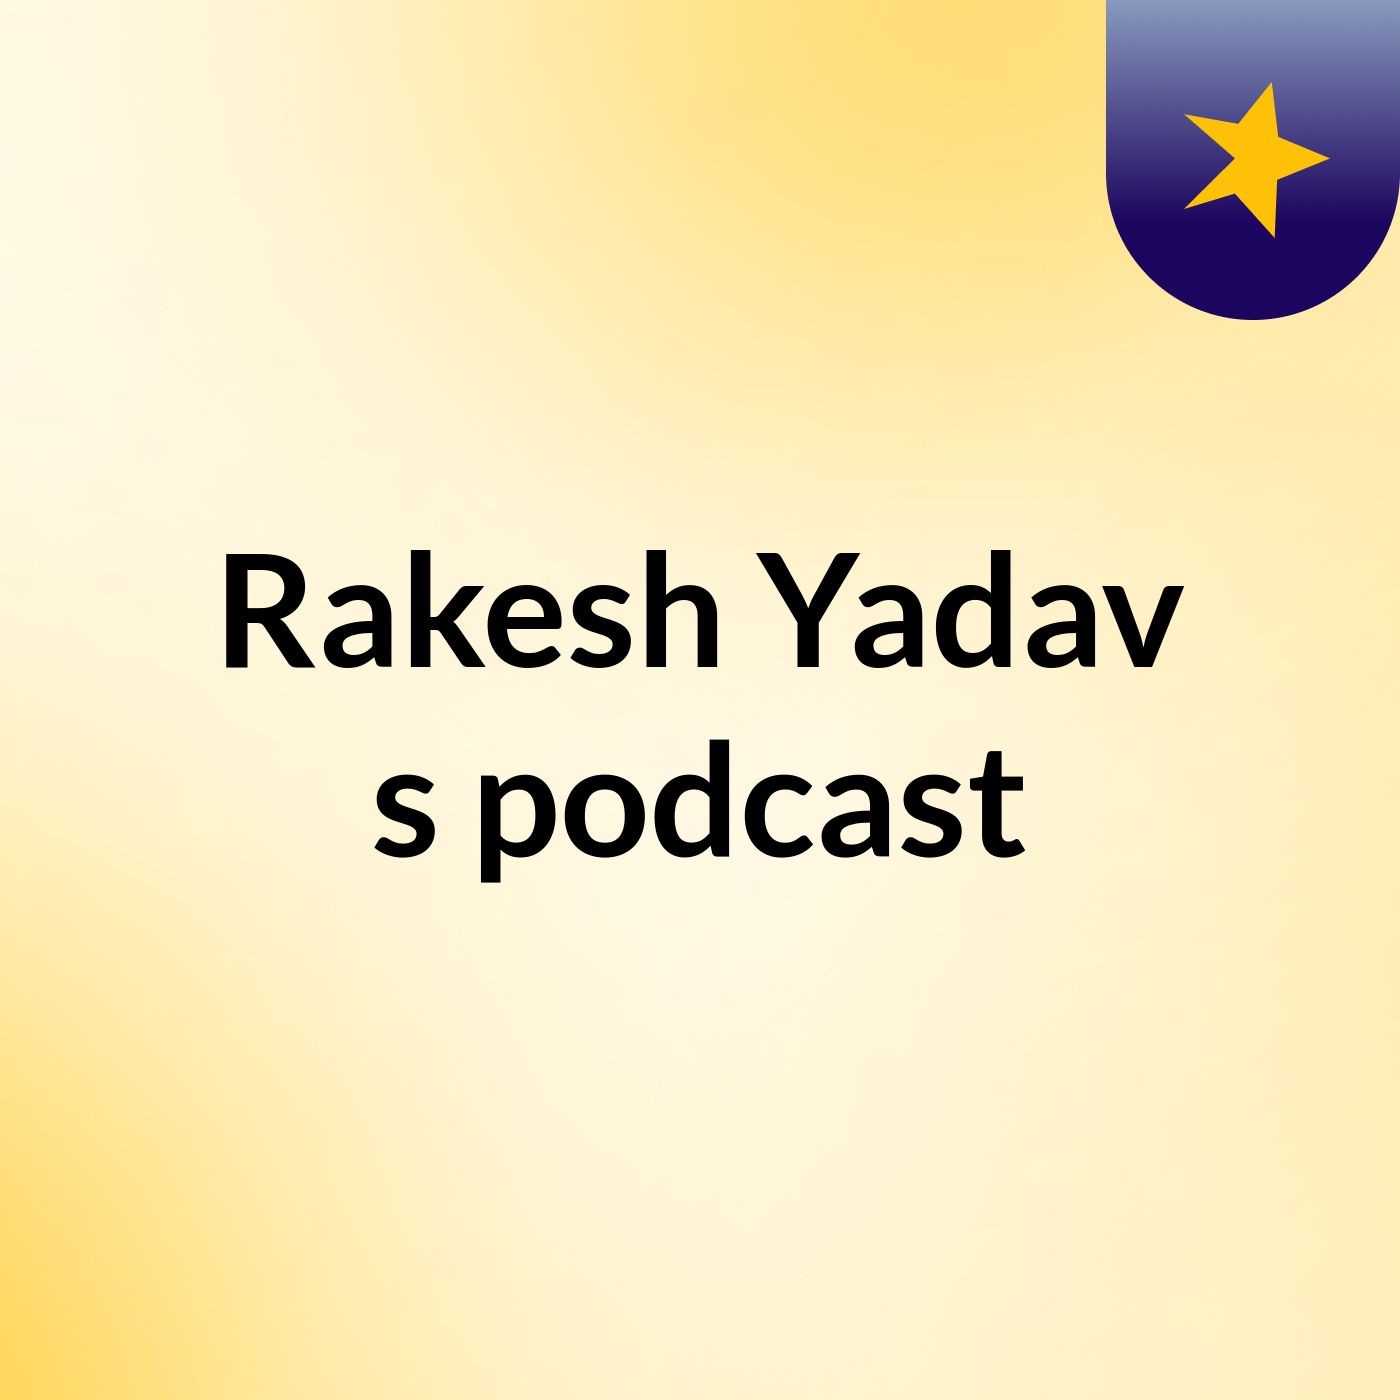 Rakesh Yadav's podcast